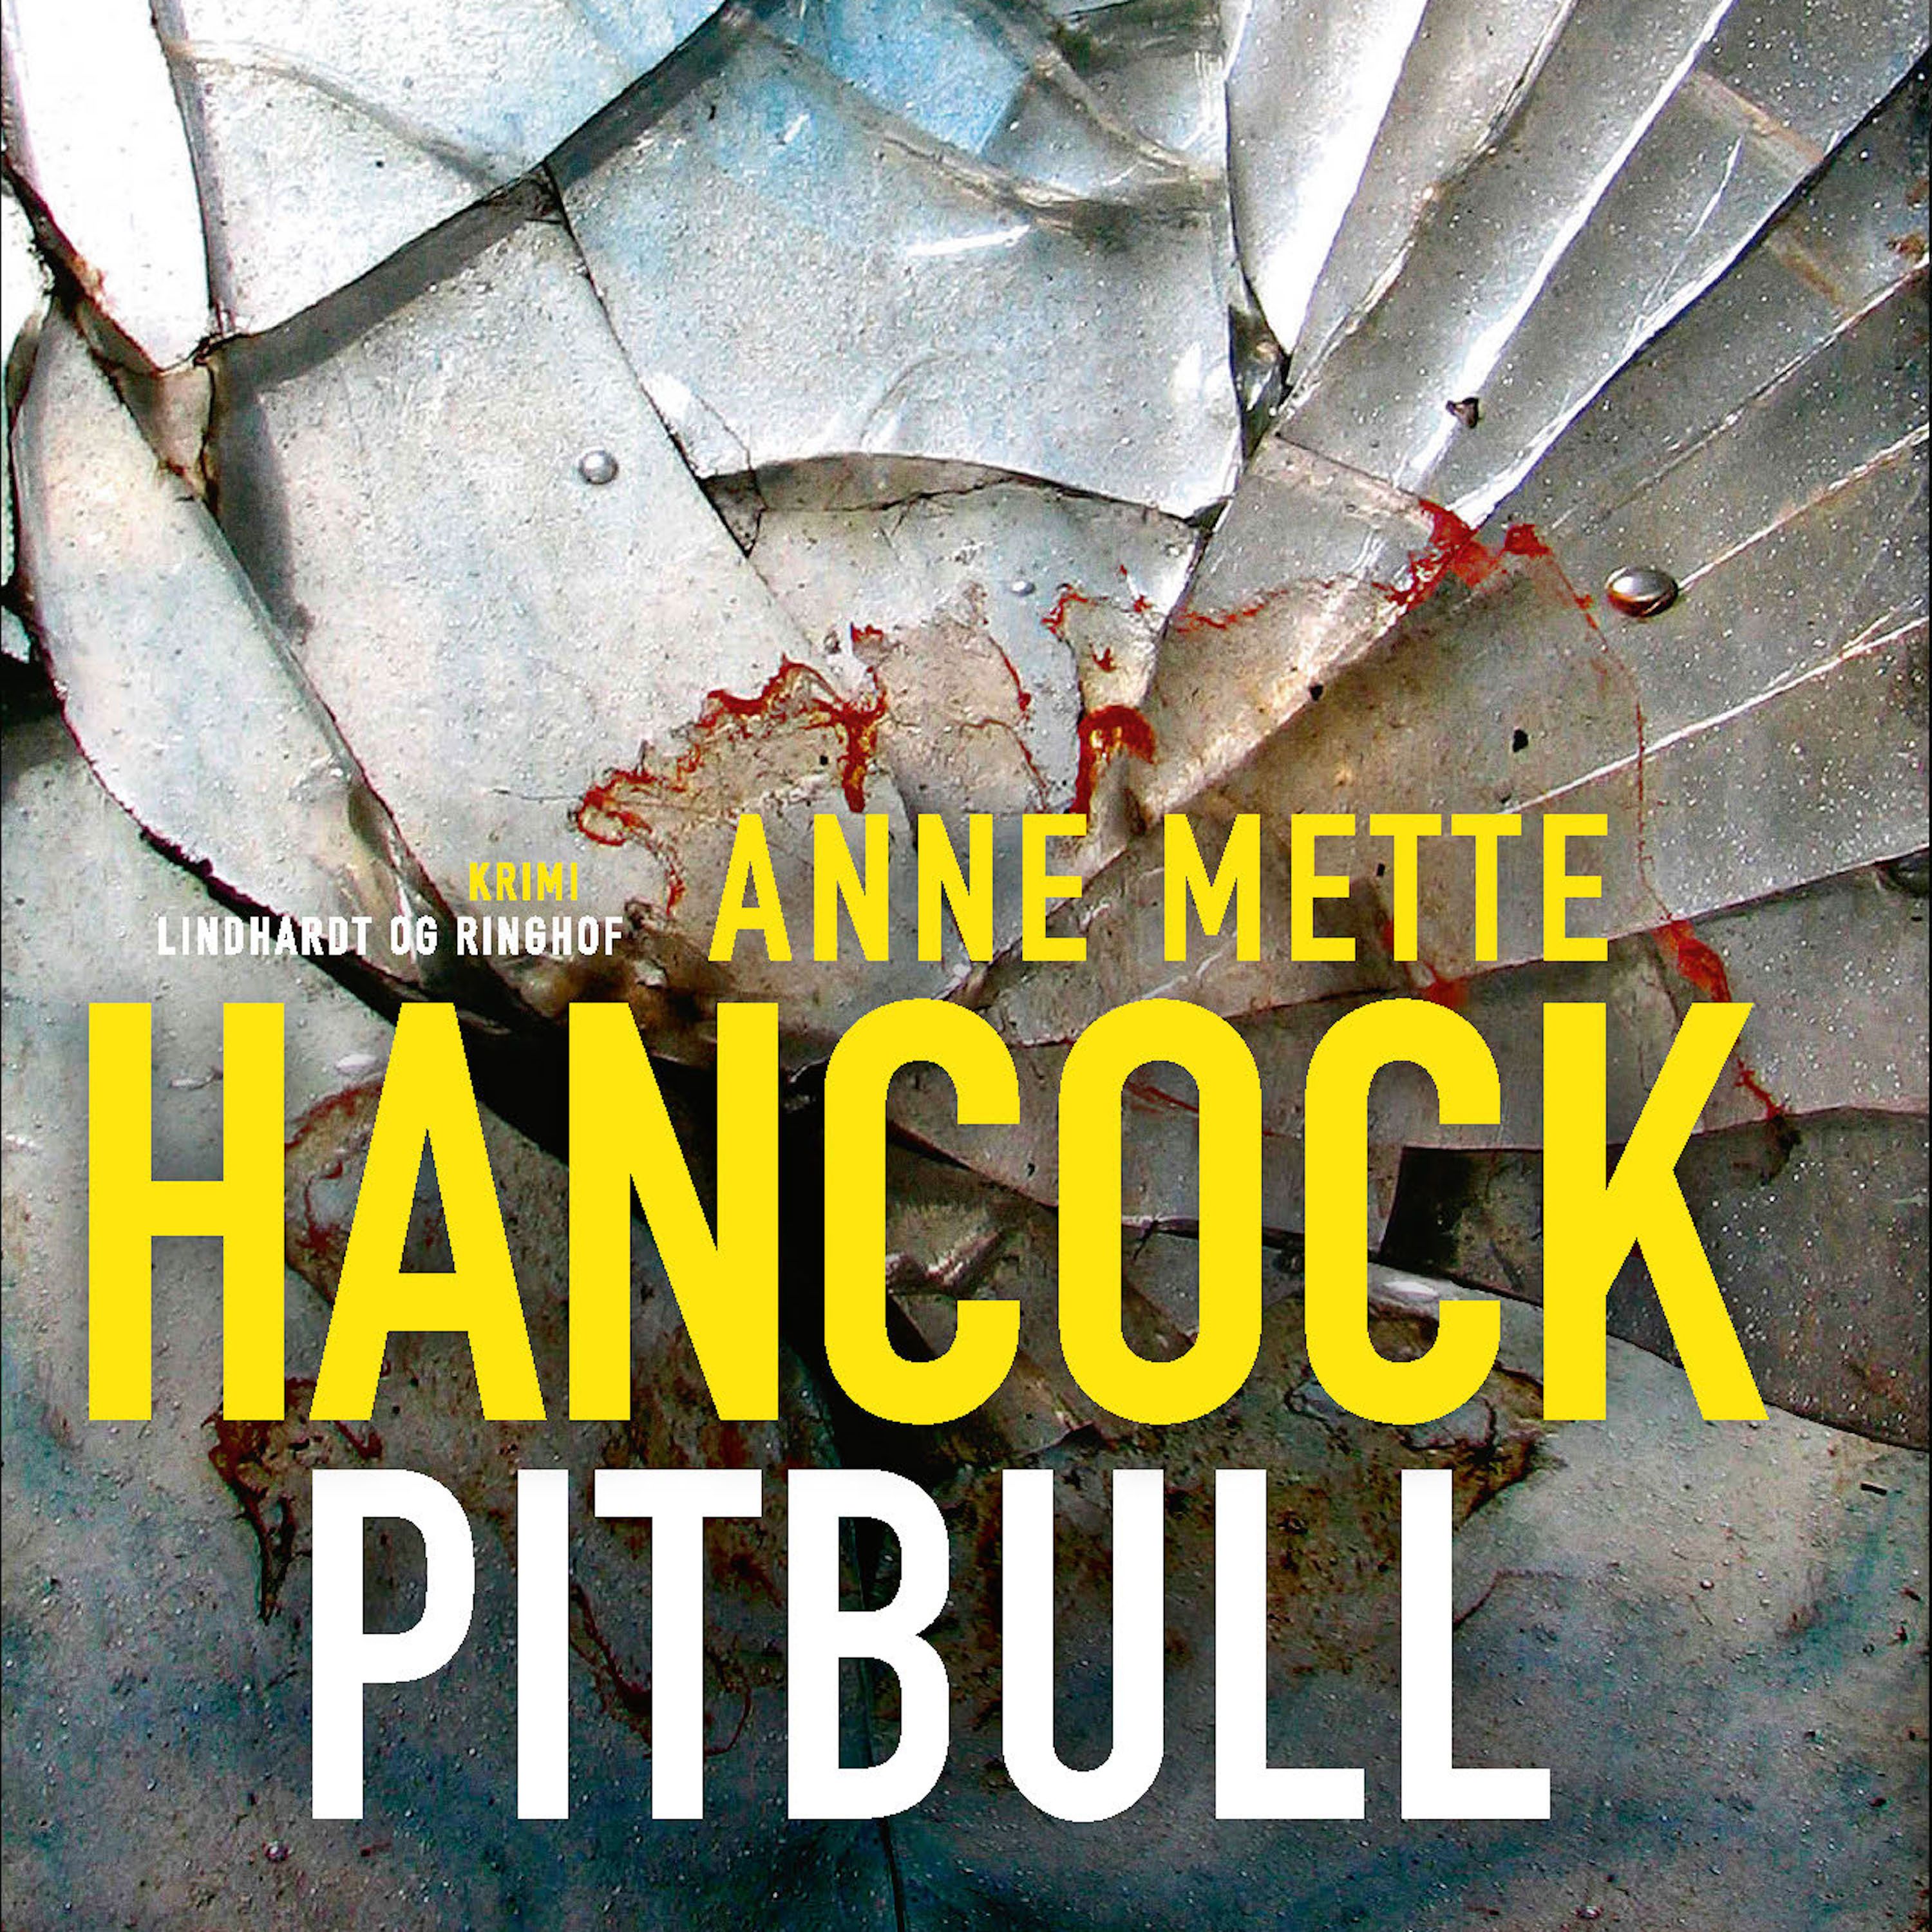 Pitbull, ljudbok av Anne Mette Hancock